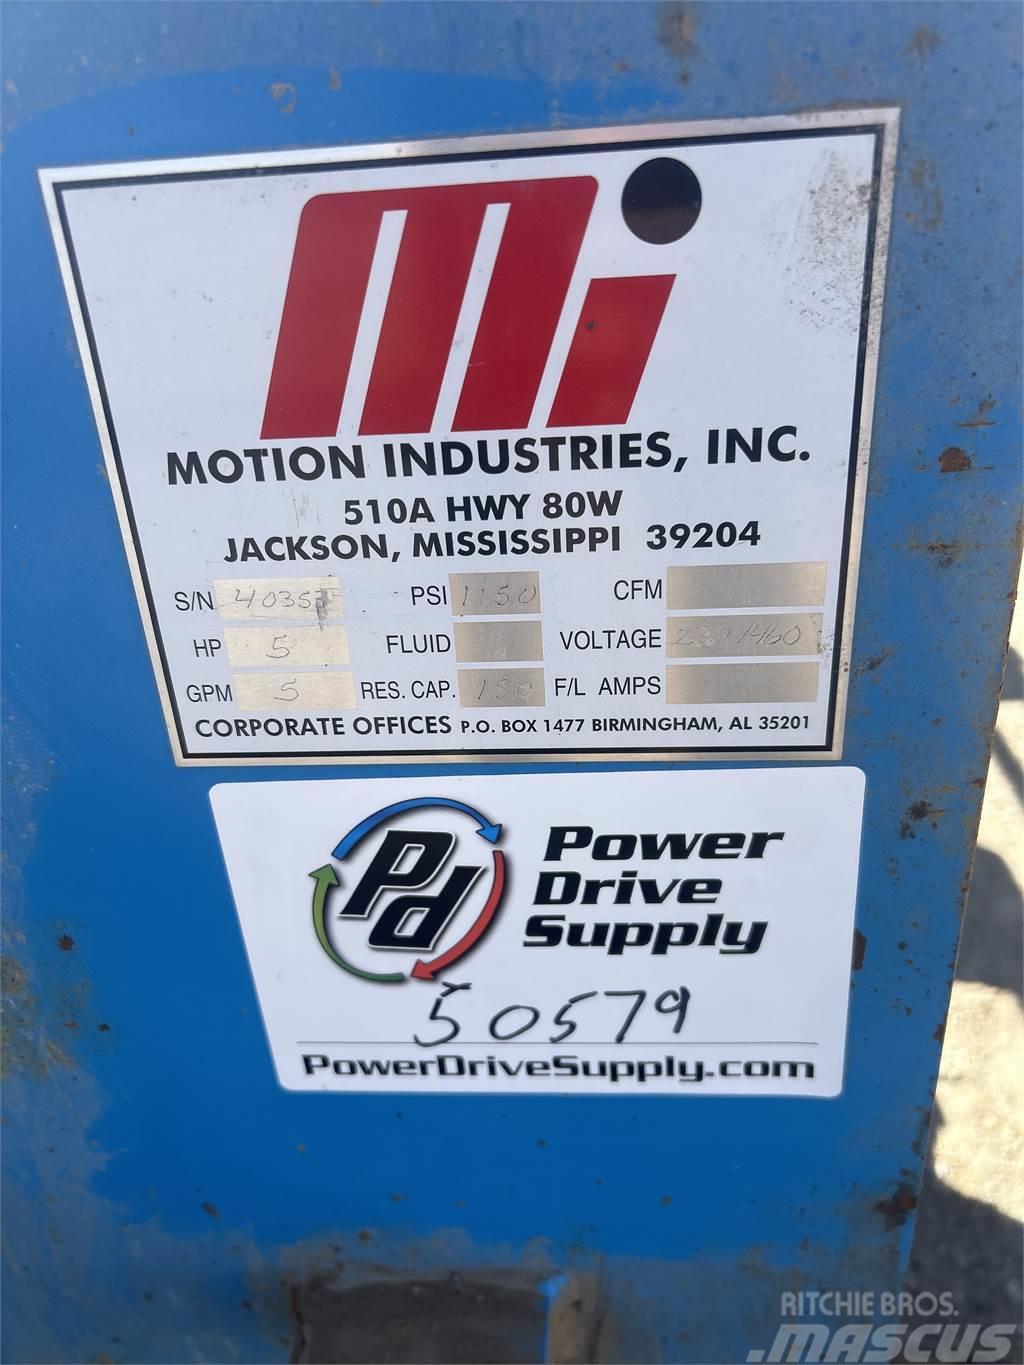  Motion industries Hydraulic Power Unit Andet boringsudstyr